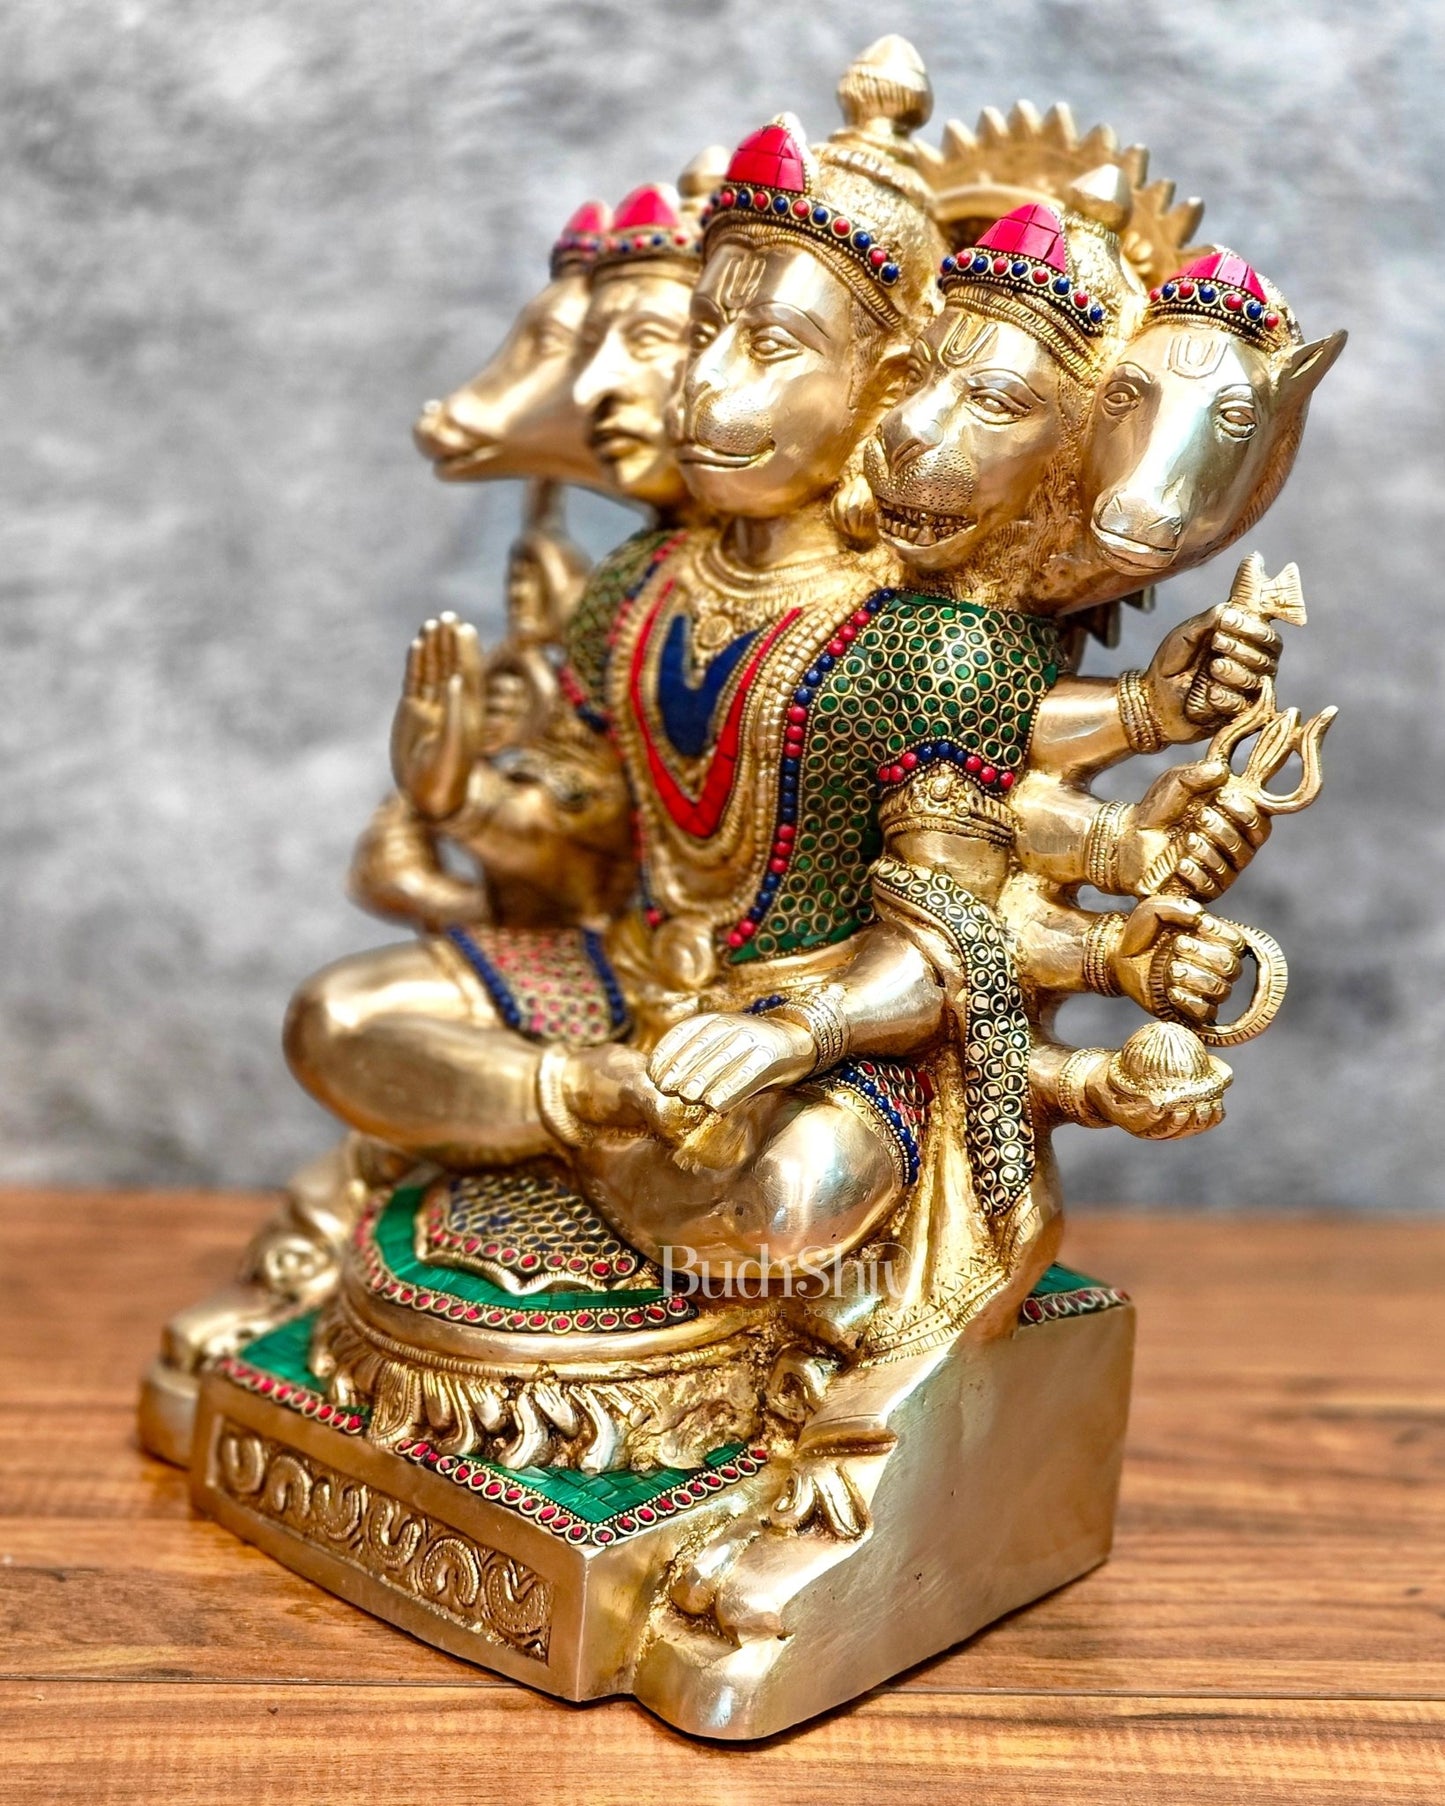 Superfine Handcrafted Brass Panchmukhi Hanuman Idol 17 inch with stonework - Budhshiv.com